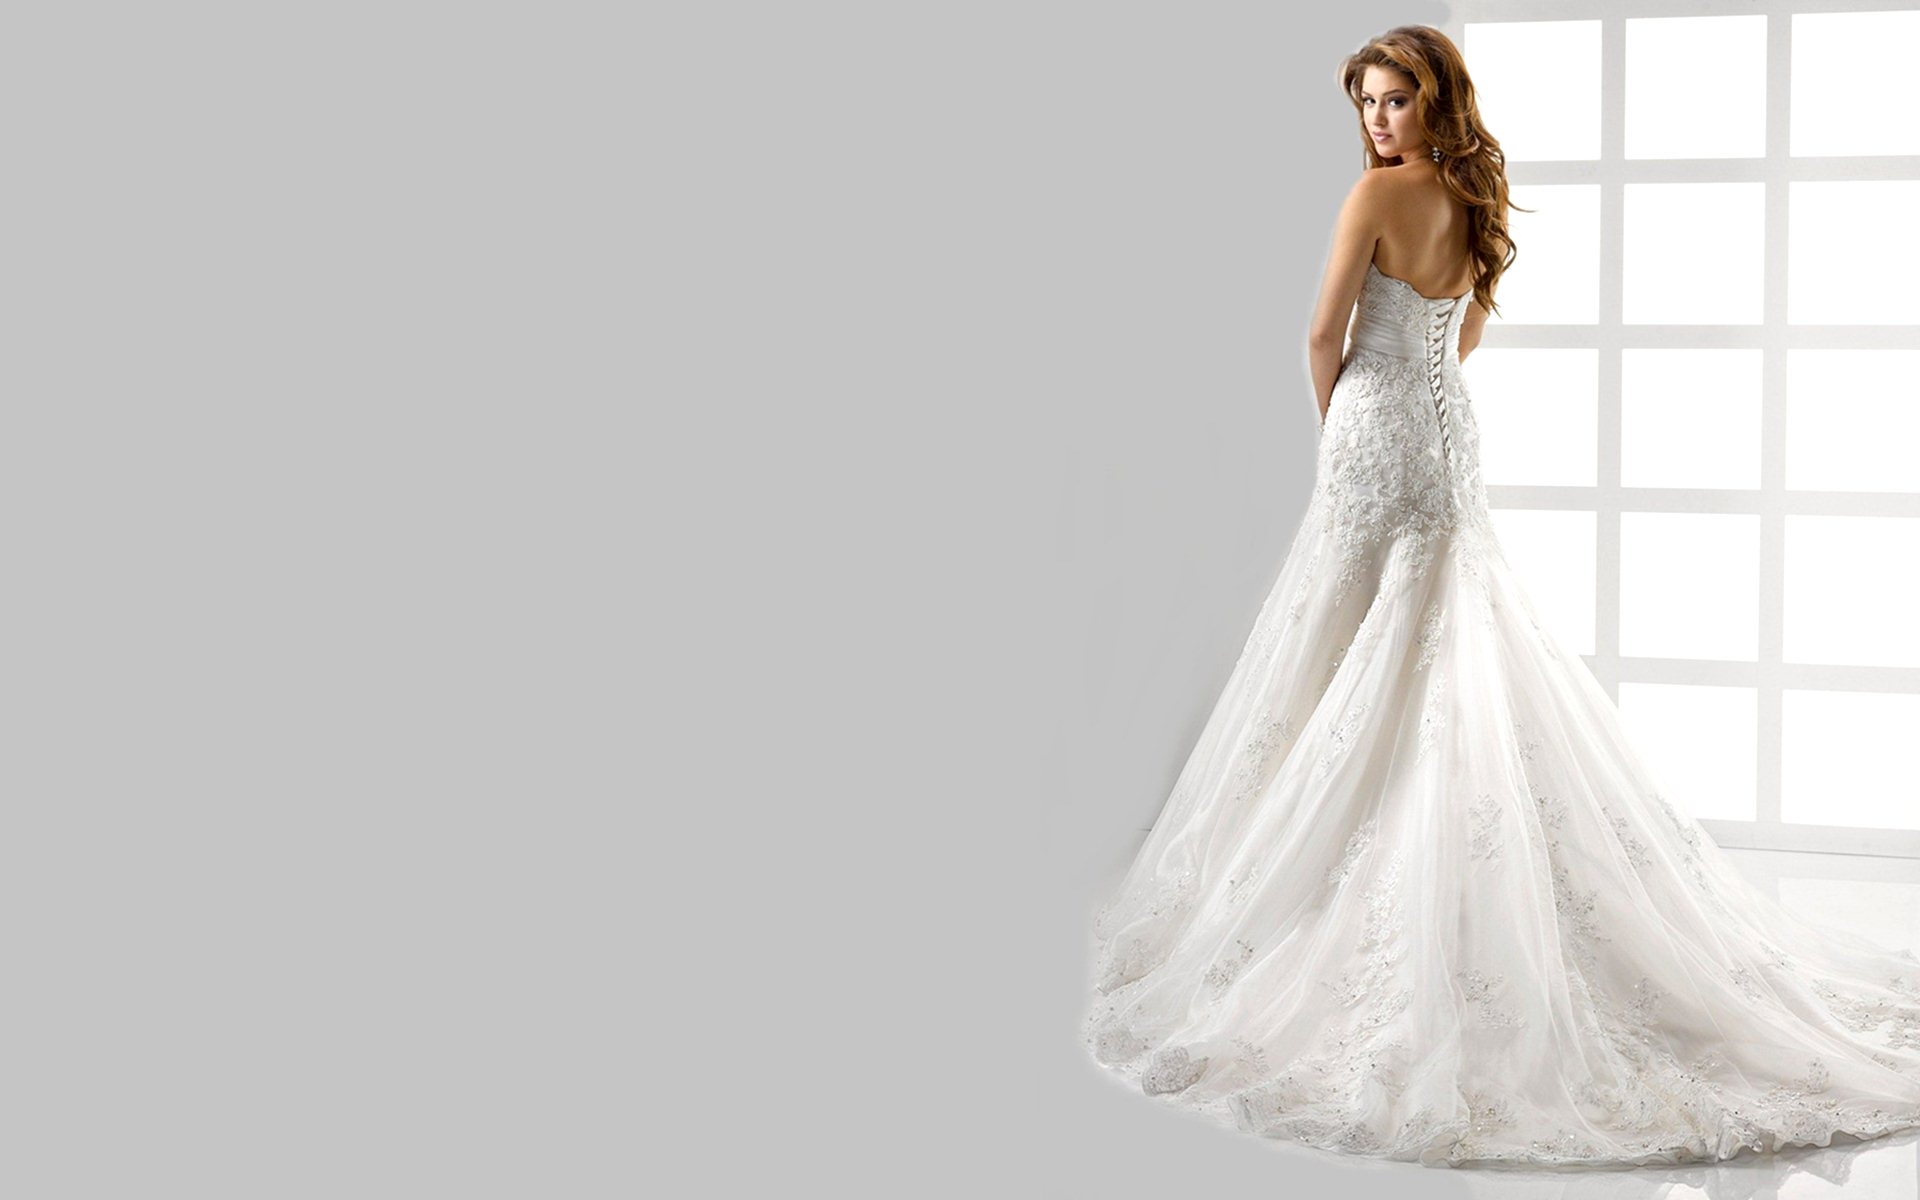 gown wallpaper, gown, wedding dress, clothing, fashion model, dress, bridal clothing, bridal party dress, bride, shoulder, a line